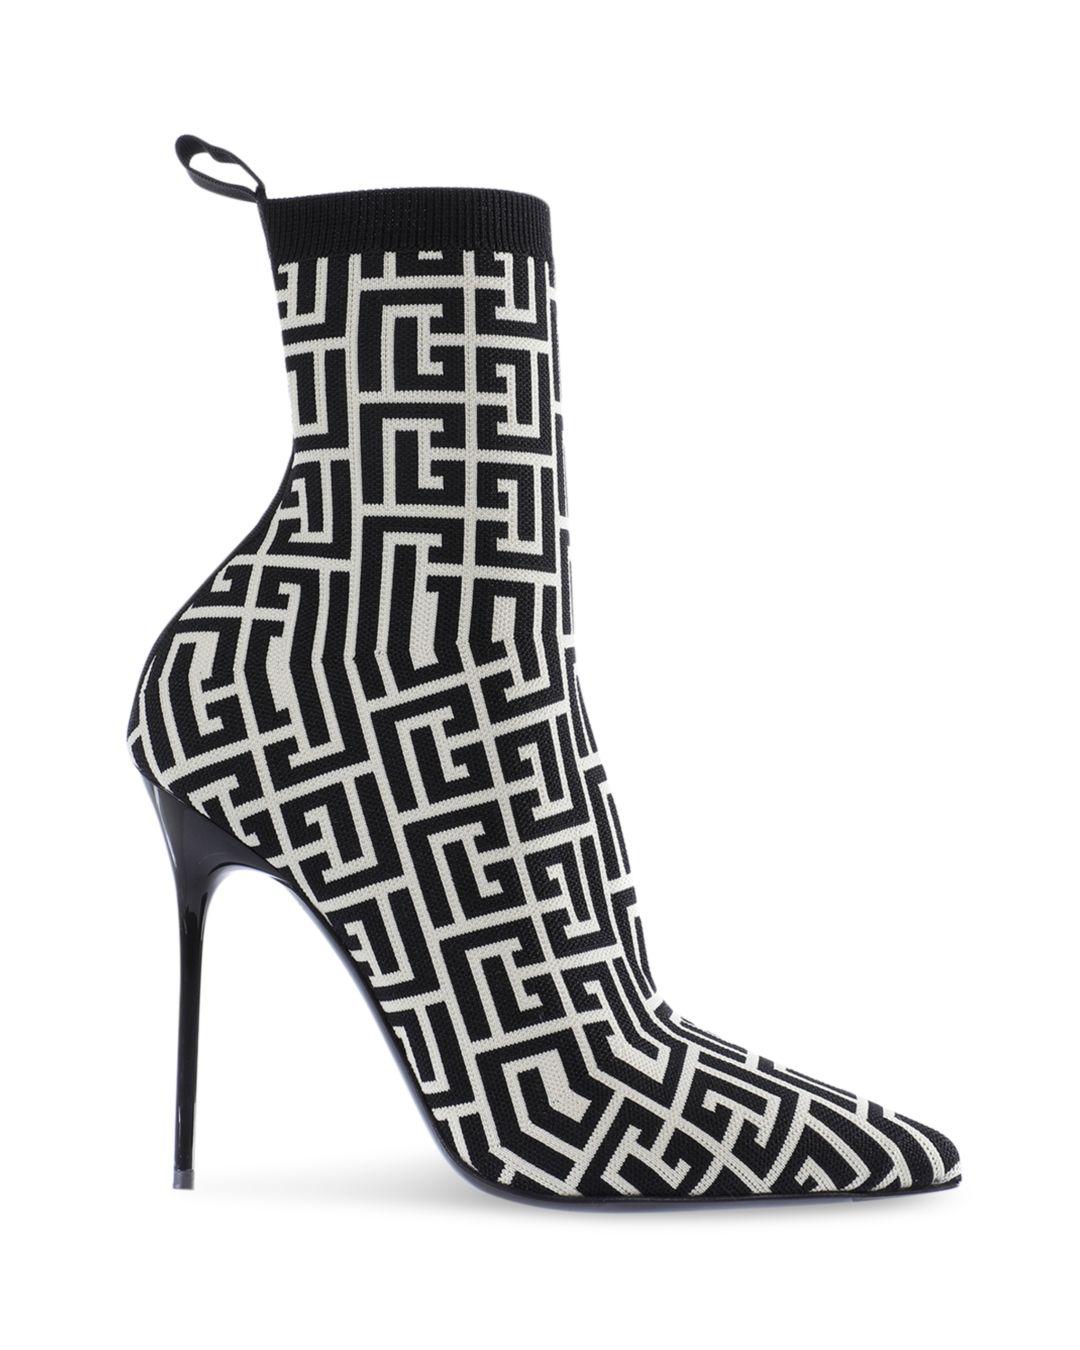 Balmain Pointed Toe Printed Knit High Heel Ankle Booties in Black | Lyst